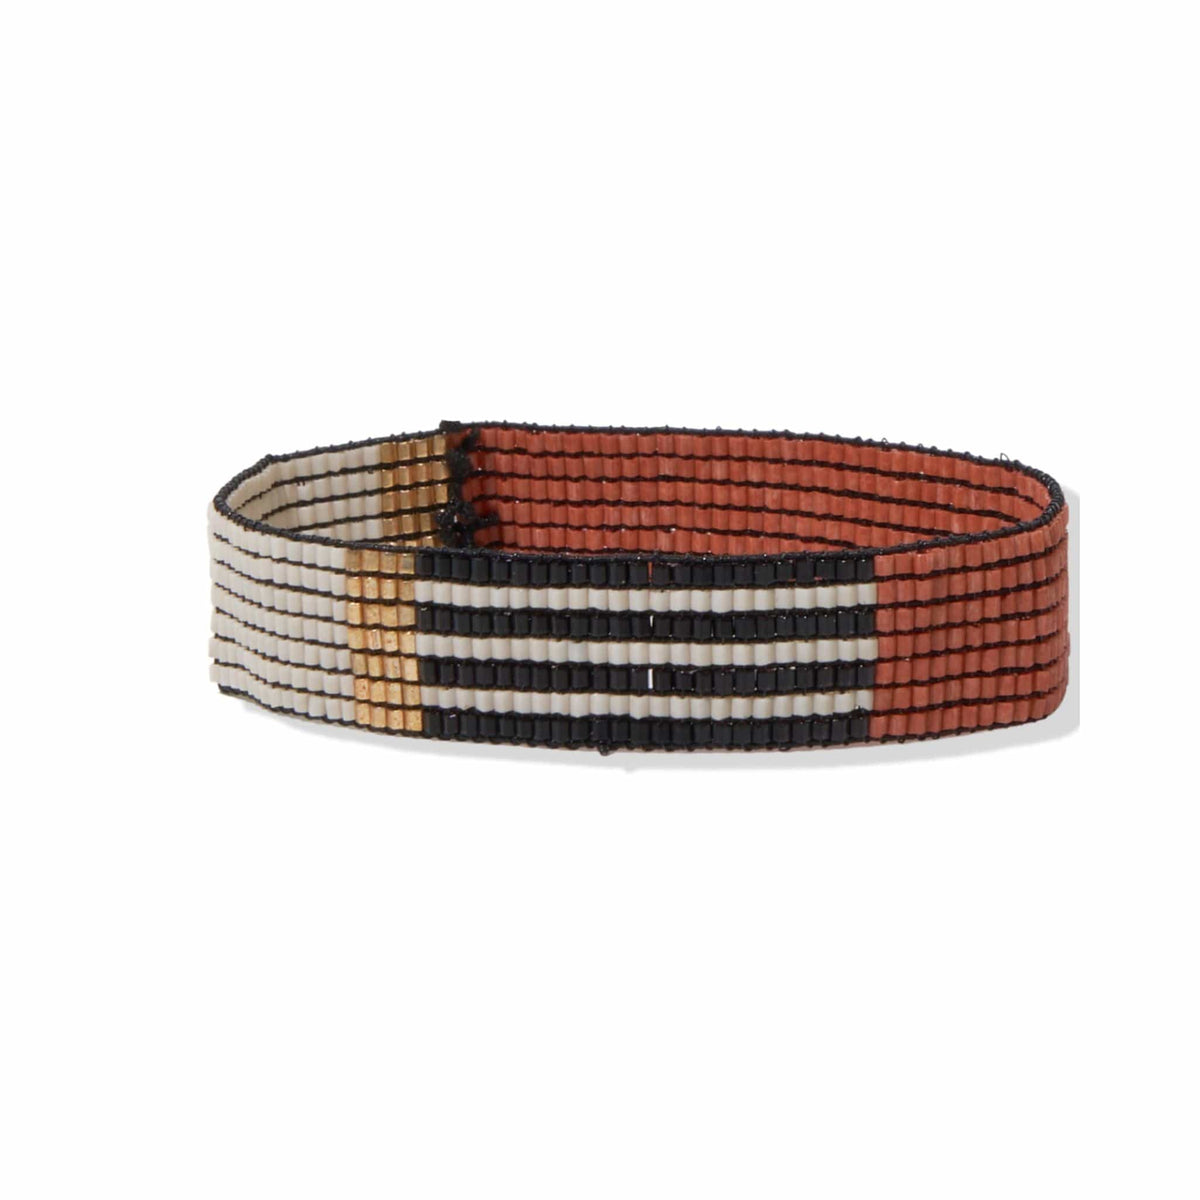 Copper Large Sparkly Stretch Bracelet by MK Designs